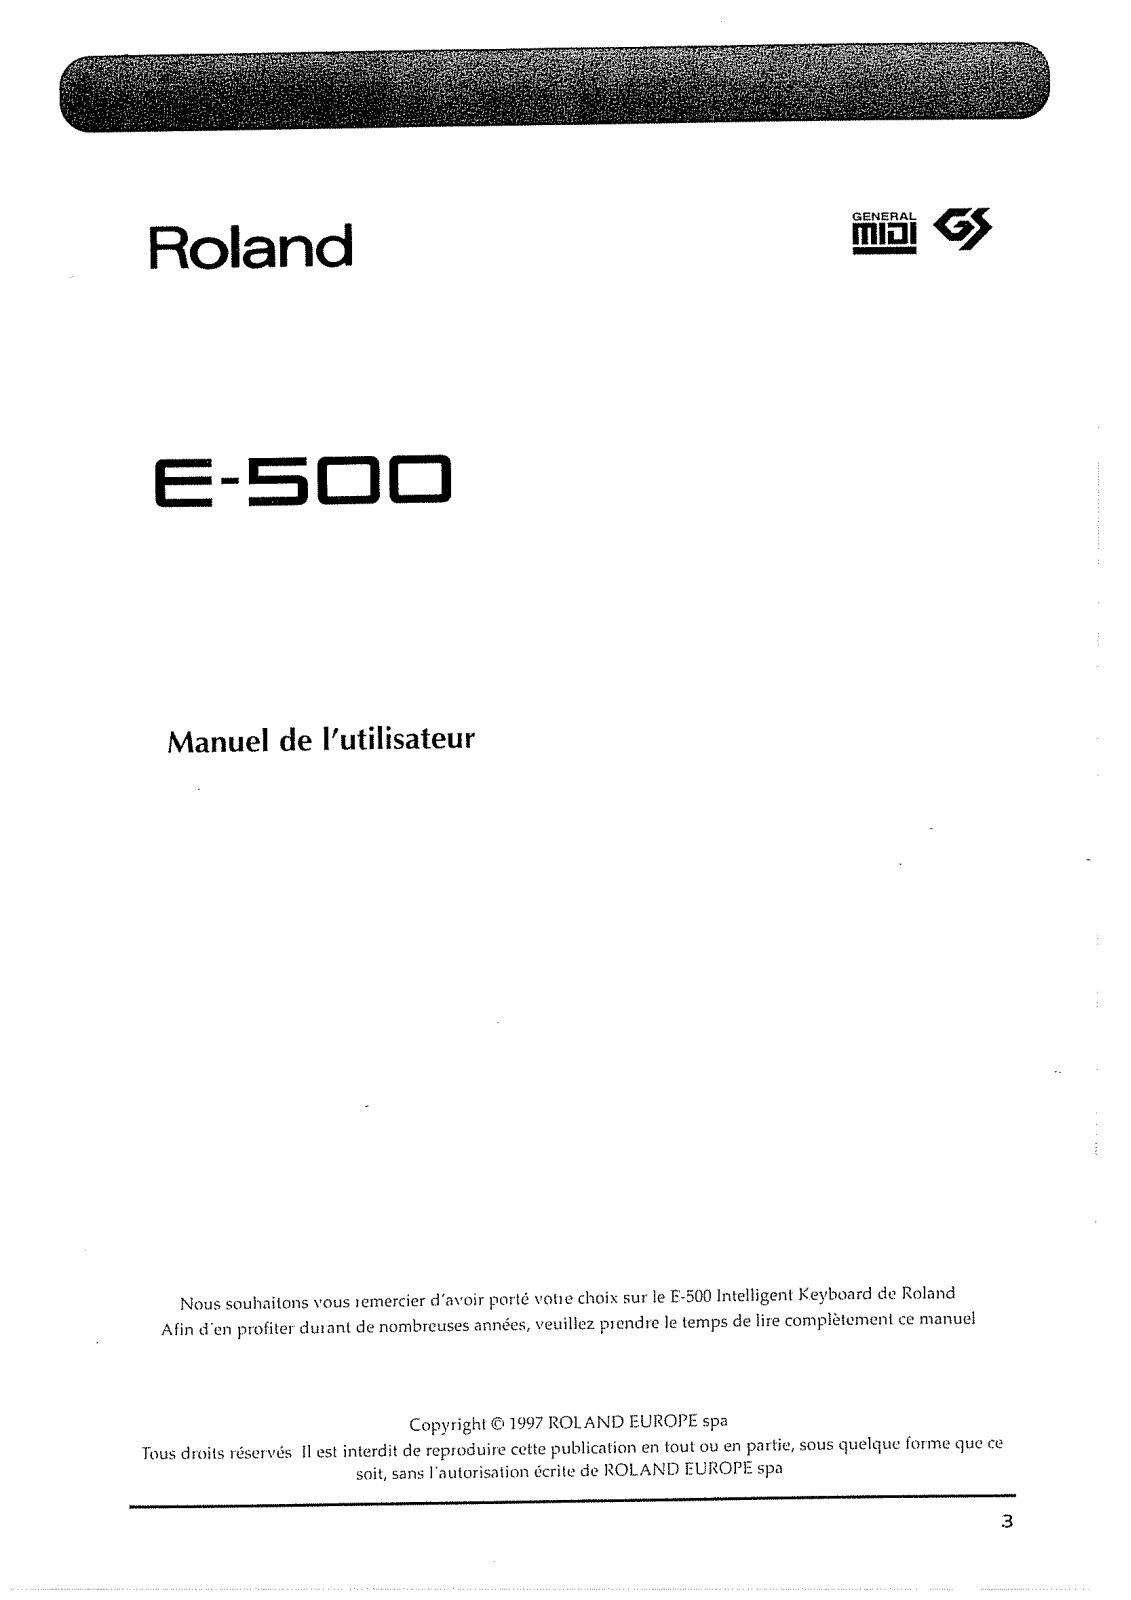 ROLAND E-500 User Manual